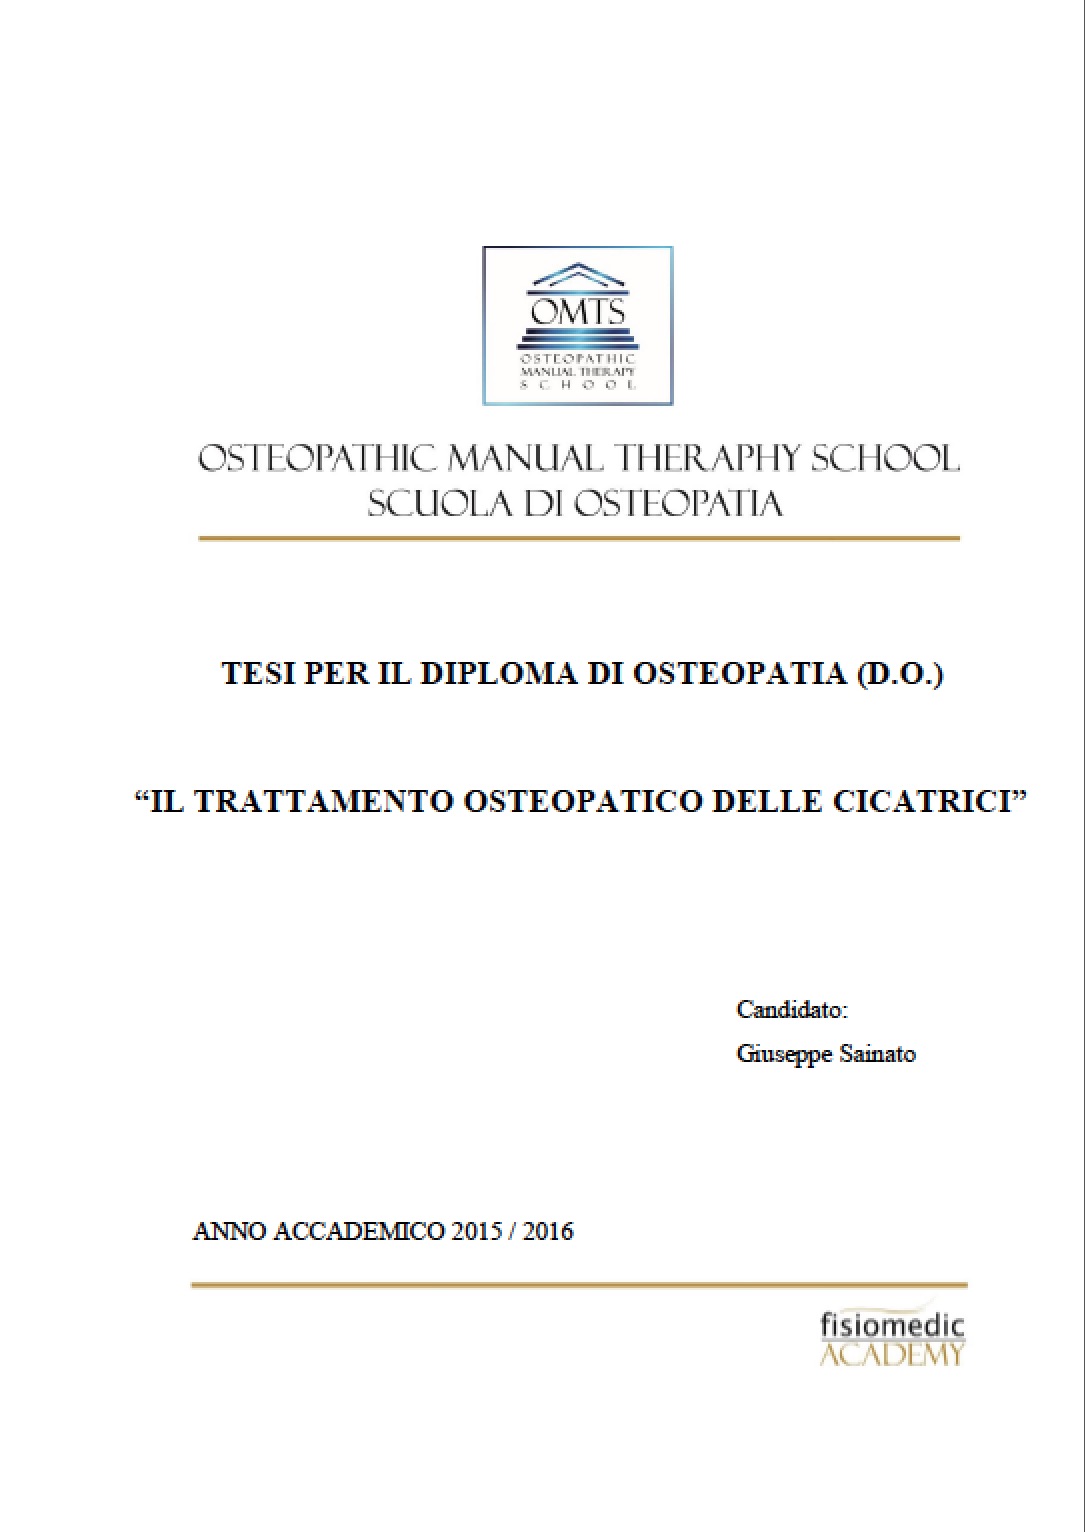 Sainato Giuseppe Tesi Diploma Osteopatia 2016